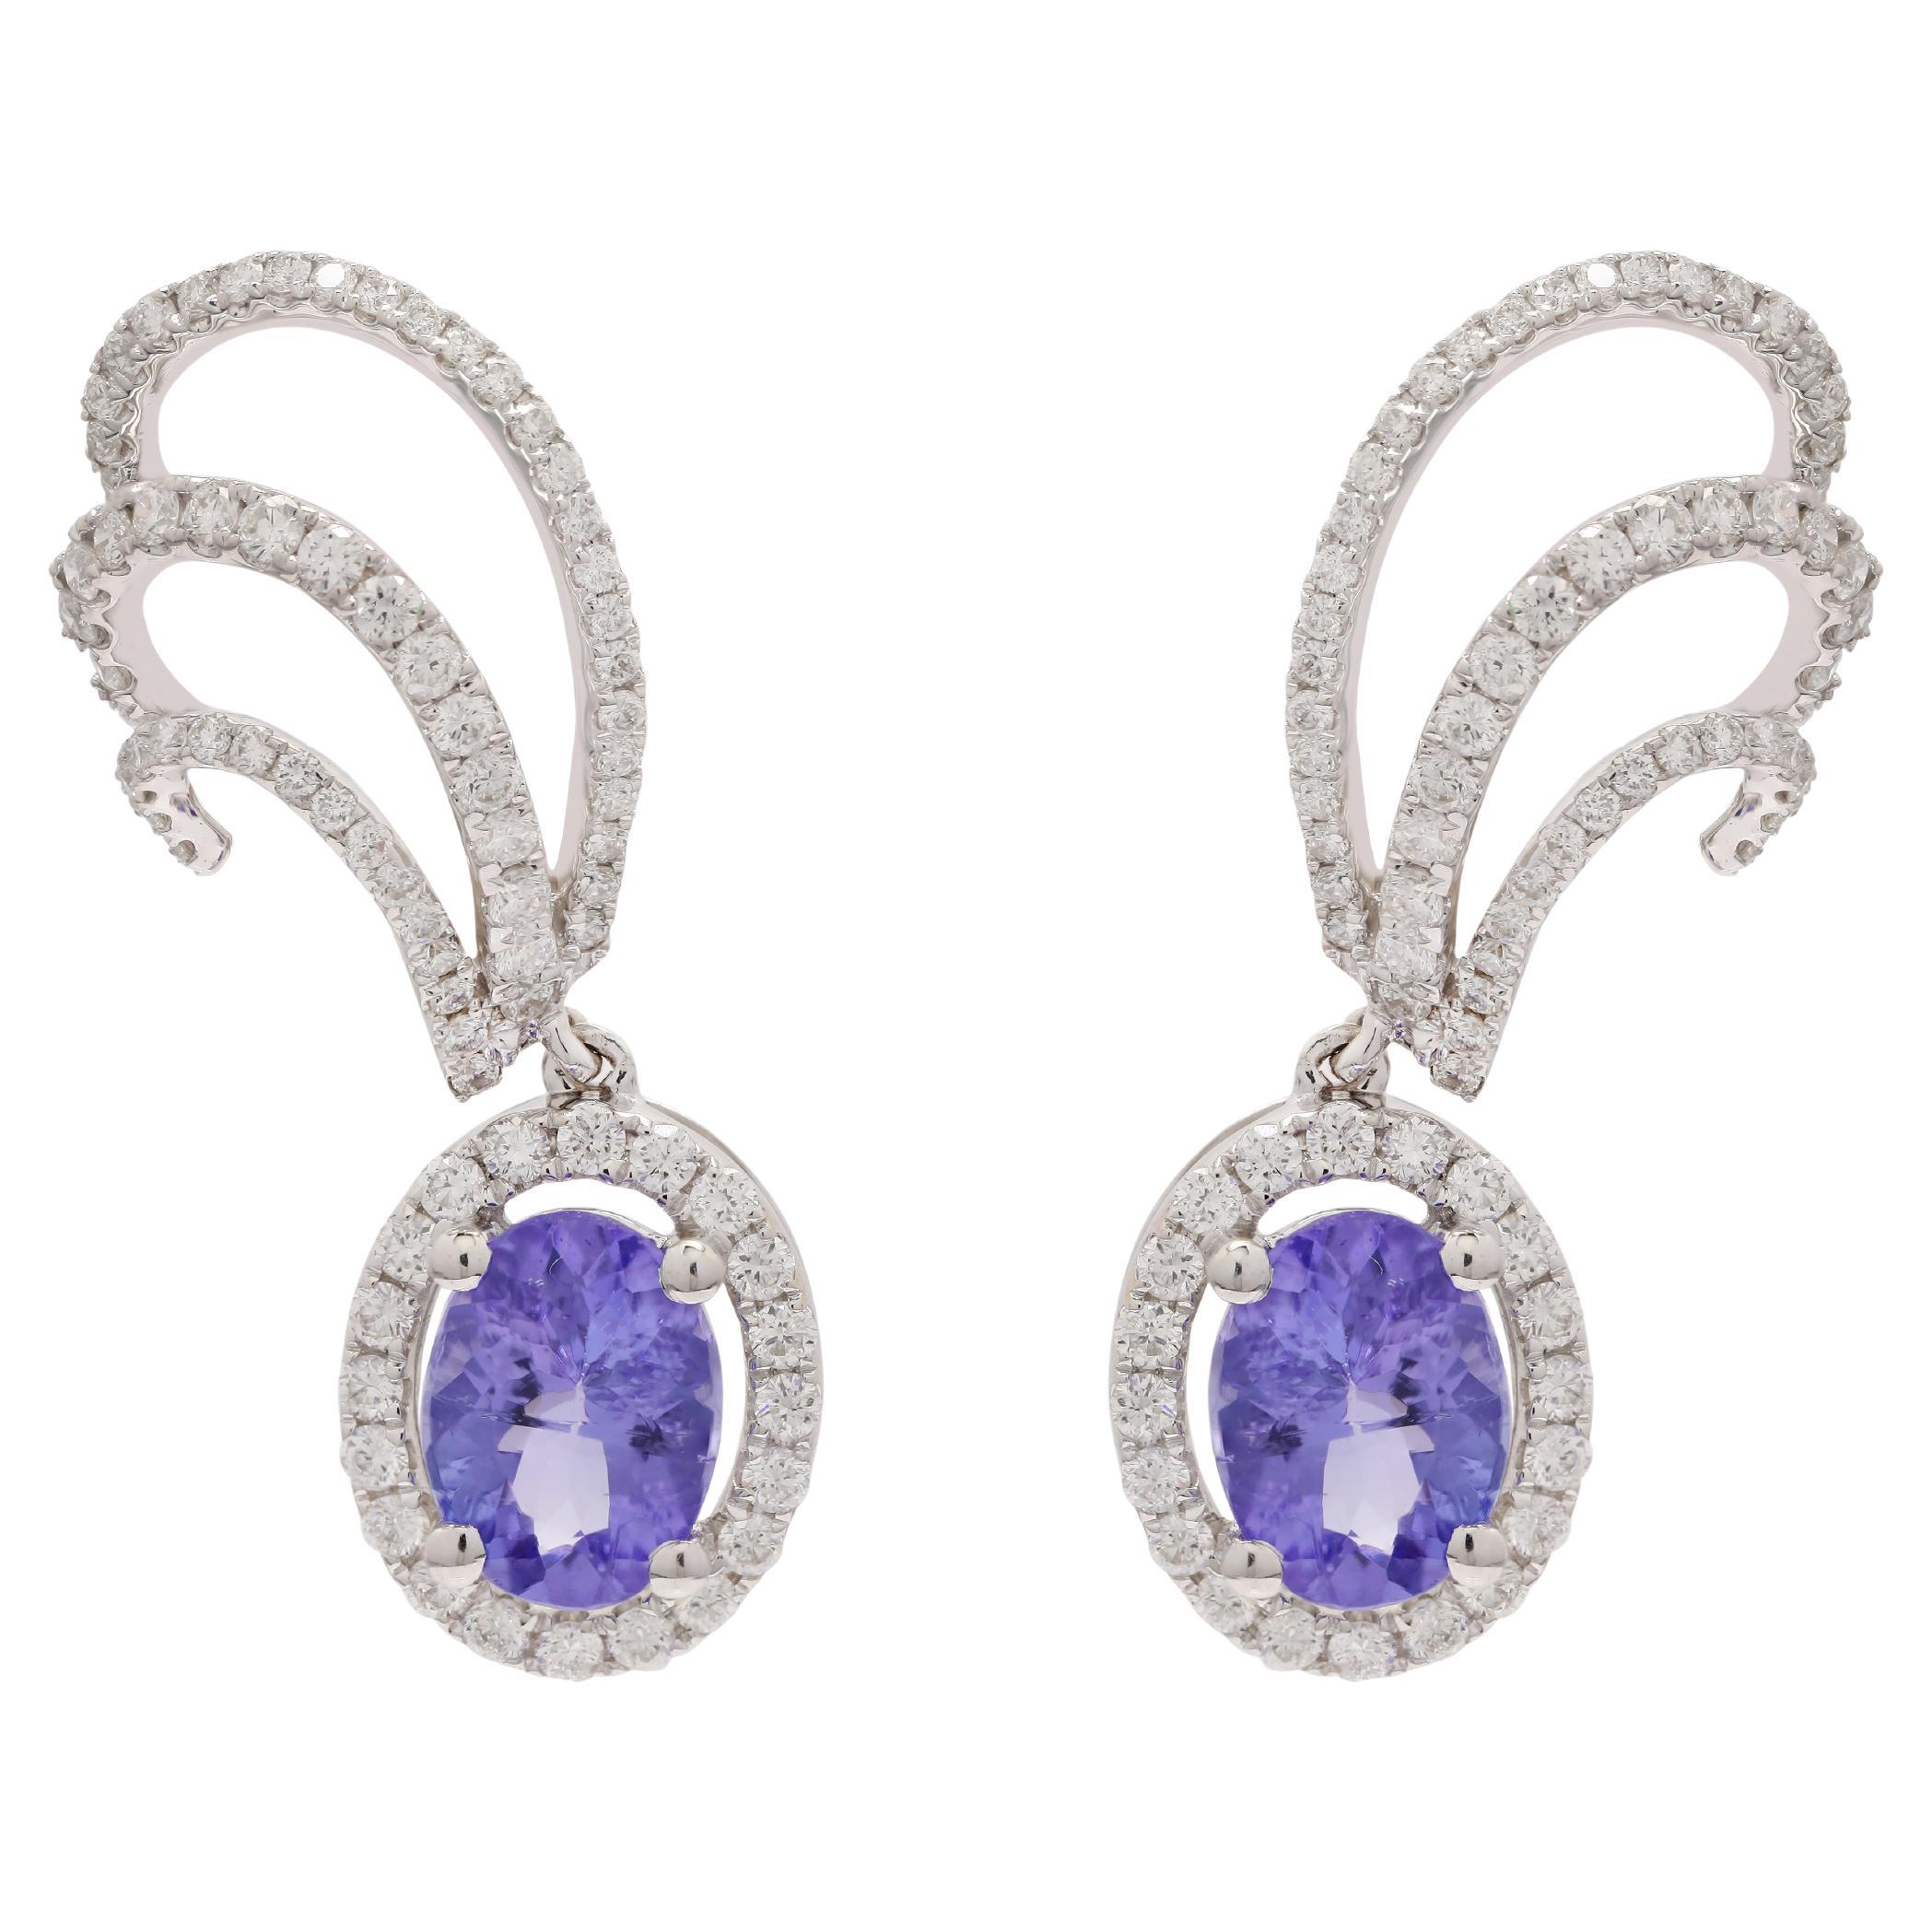 1.98 Carat Tanzanite and Diamond Designer Stud Earrings in 14K White Gold